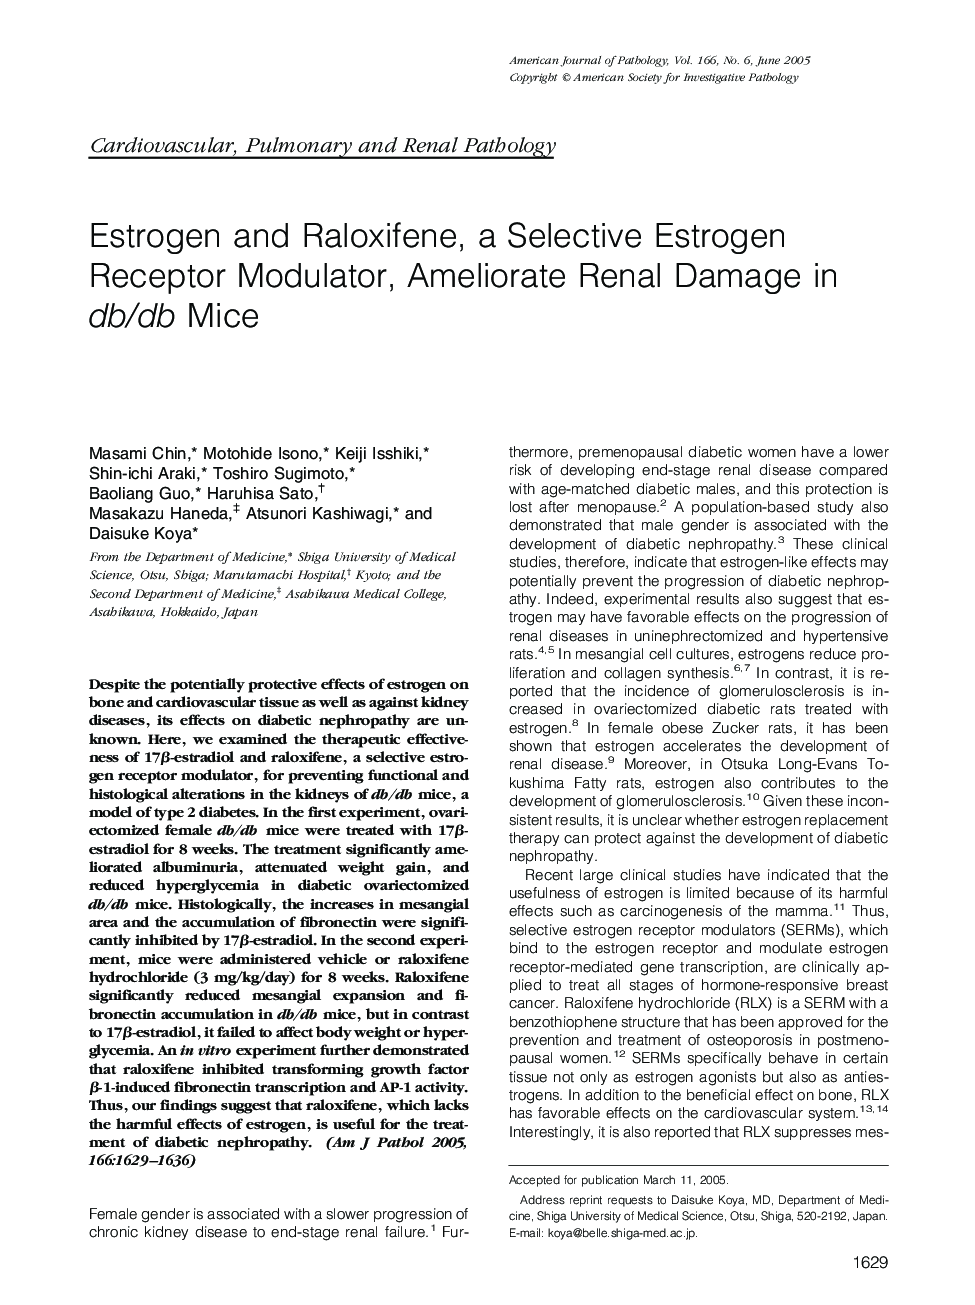 Estrogen and Raloxifene, a Selective Estrogen Receptor Modulator, Ameliorate Renal Damage in db/db Mice